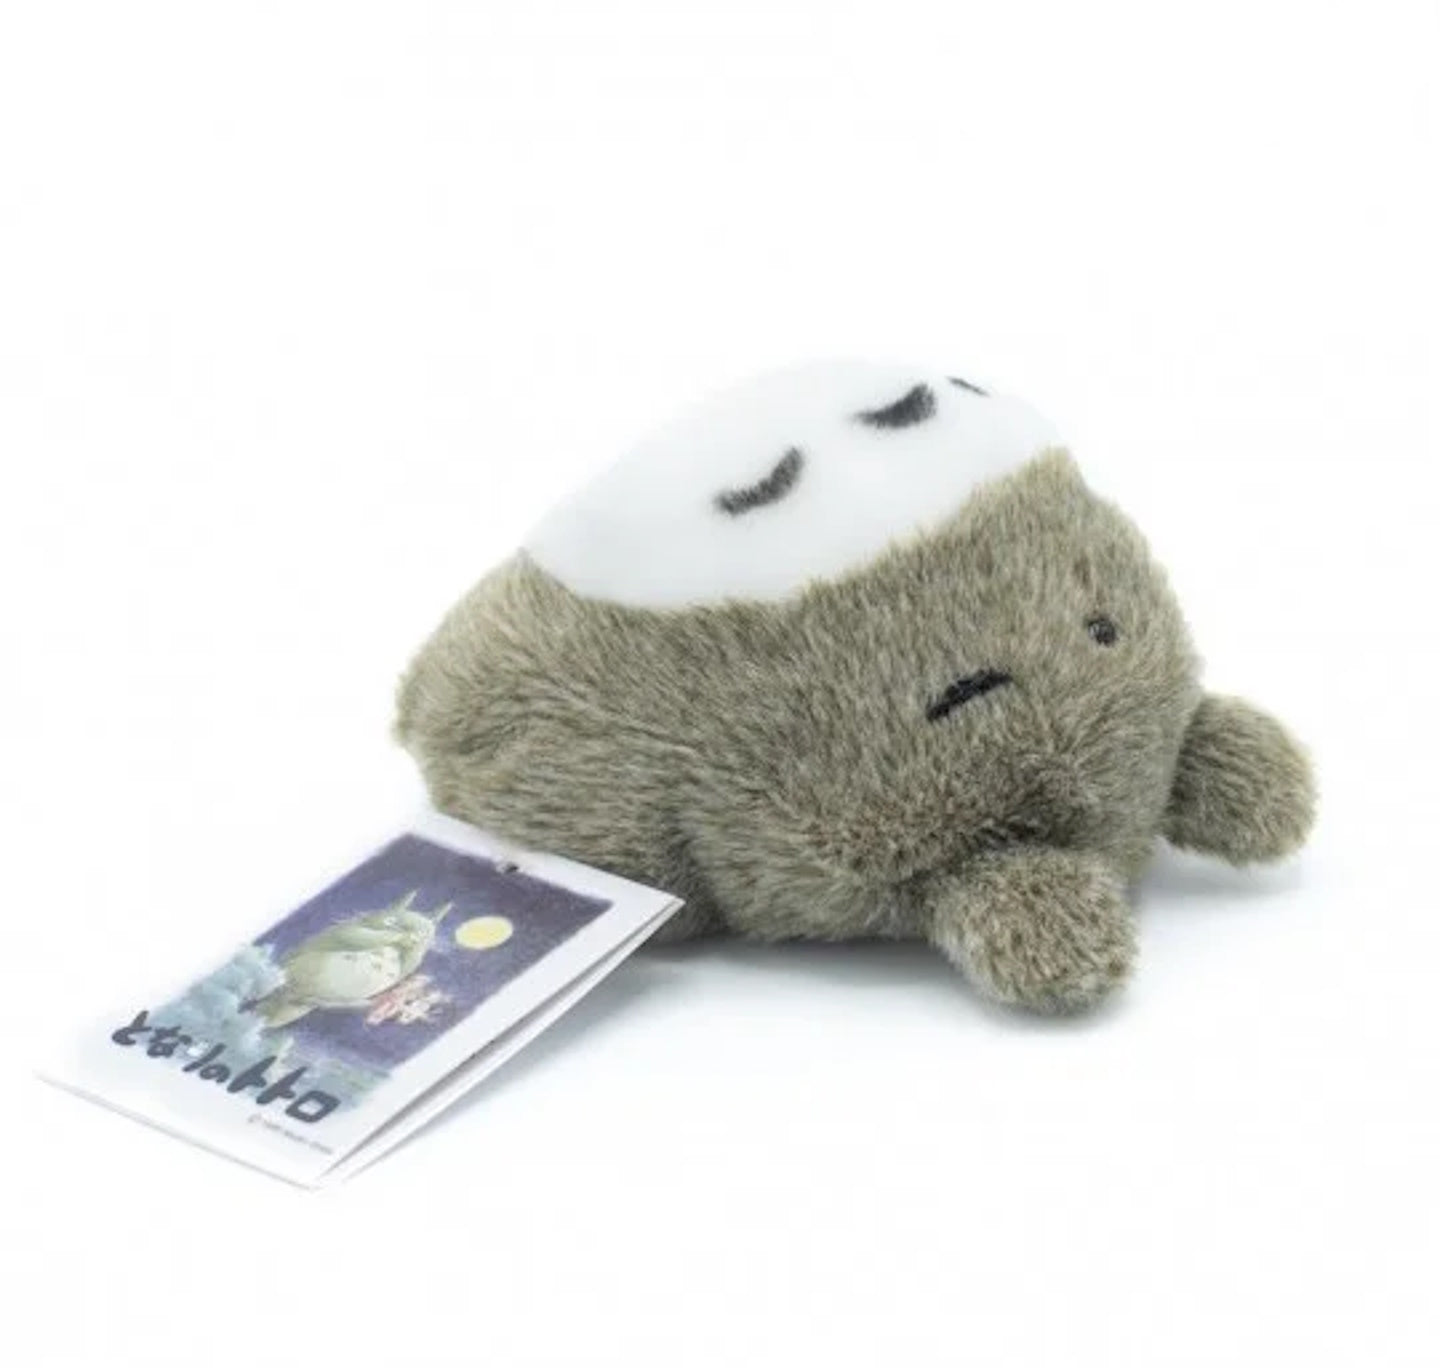 Sleeping Totoro Plush - My Neighbor Totoro